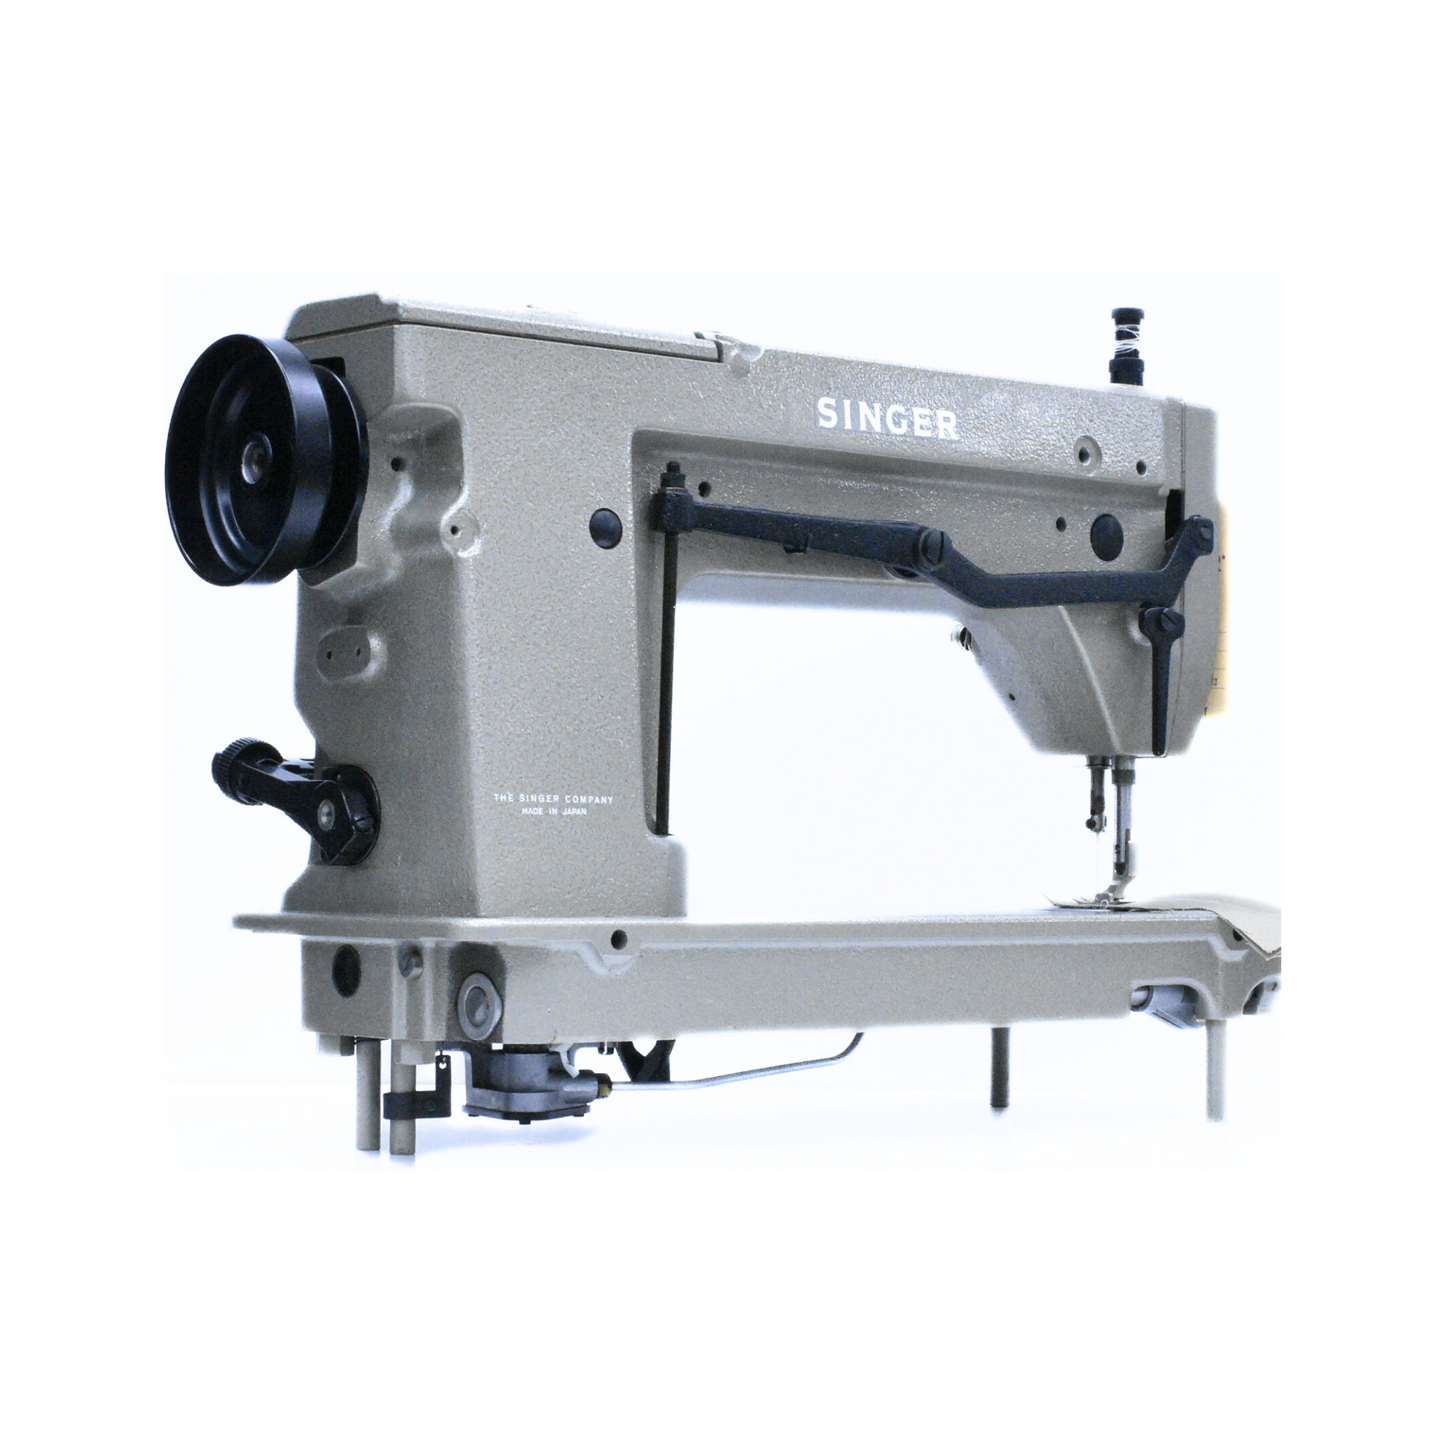 Singer 591 D300 sewing machine